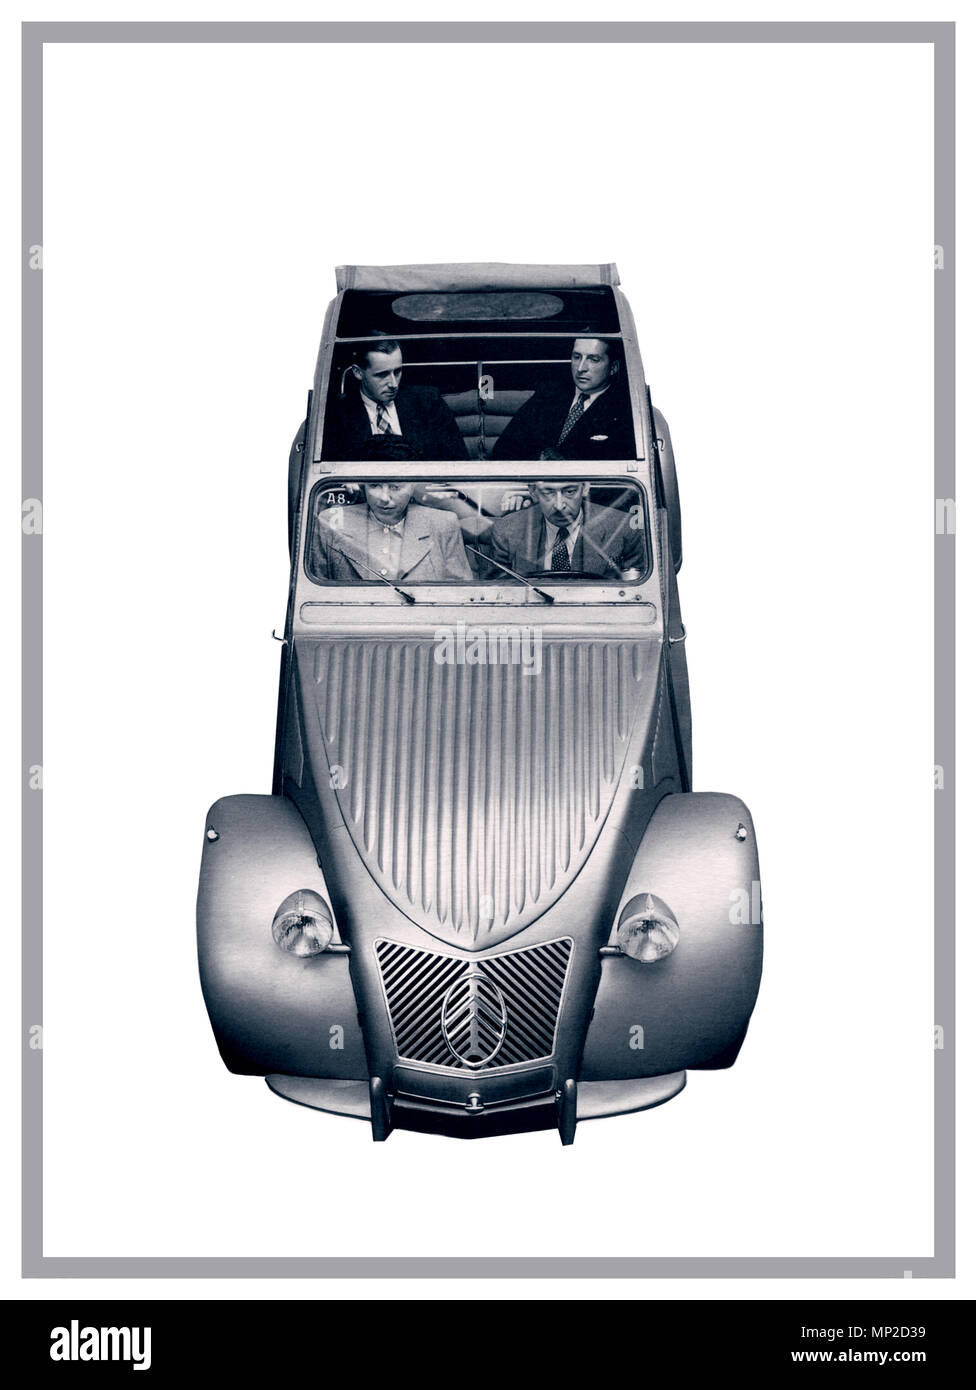 60 Jahre Citroën 2CV